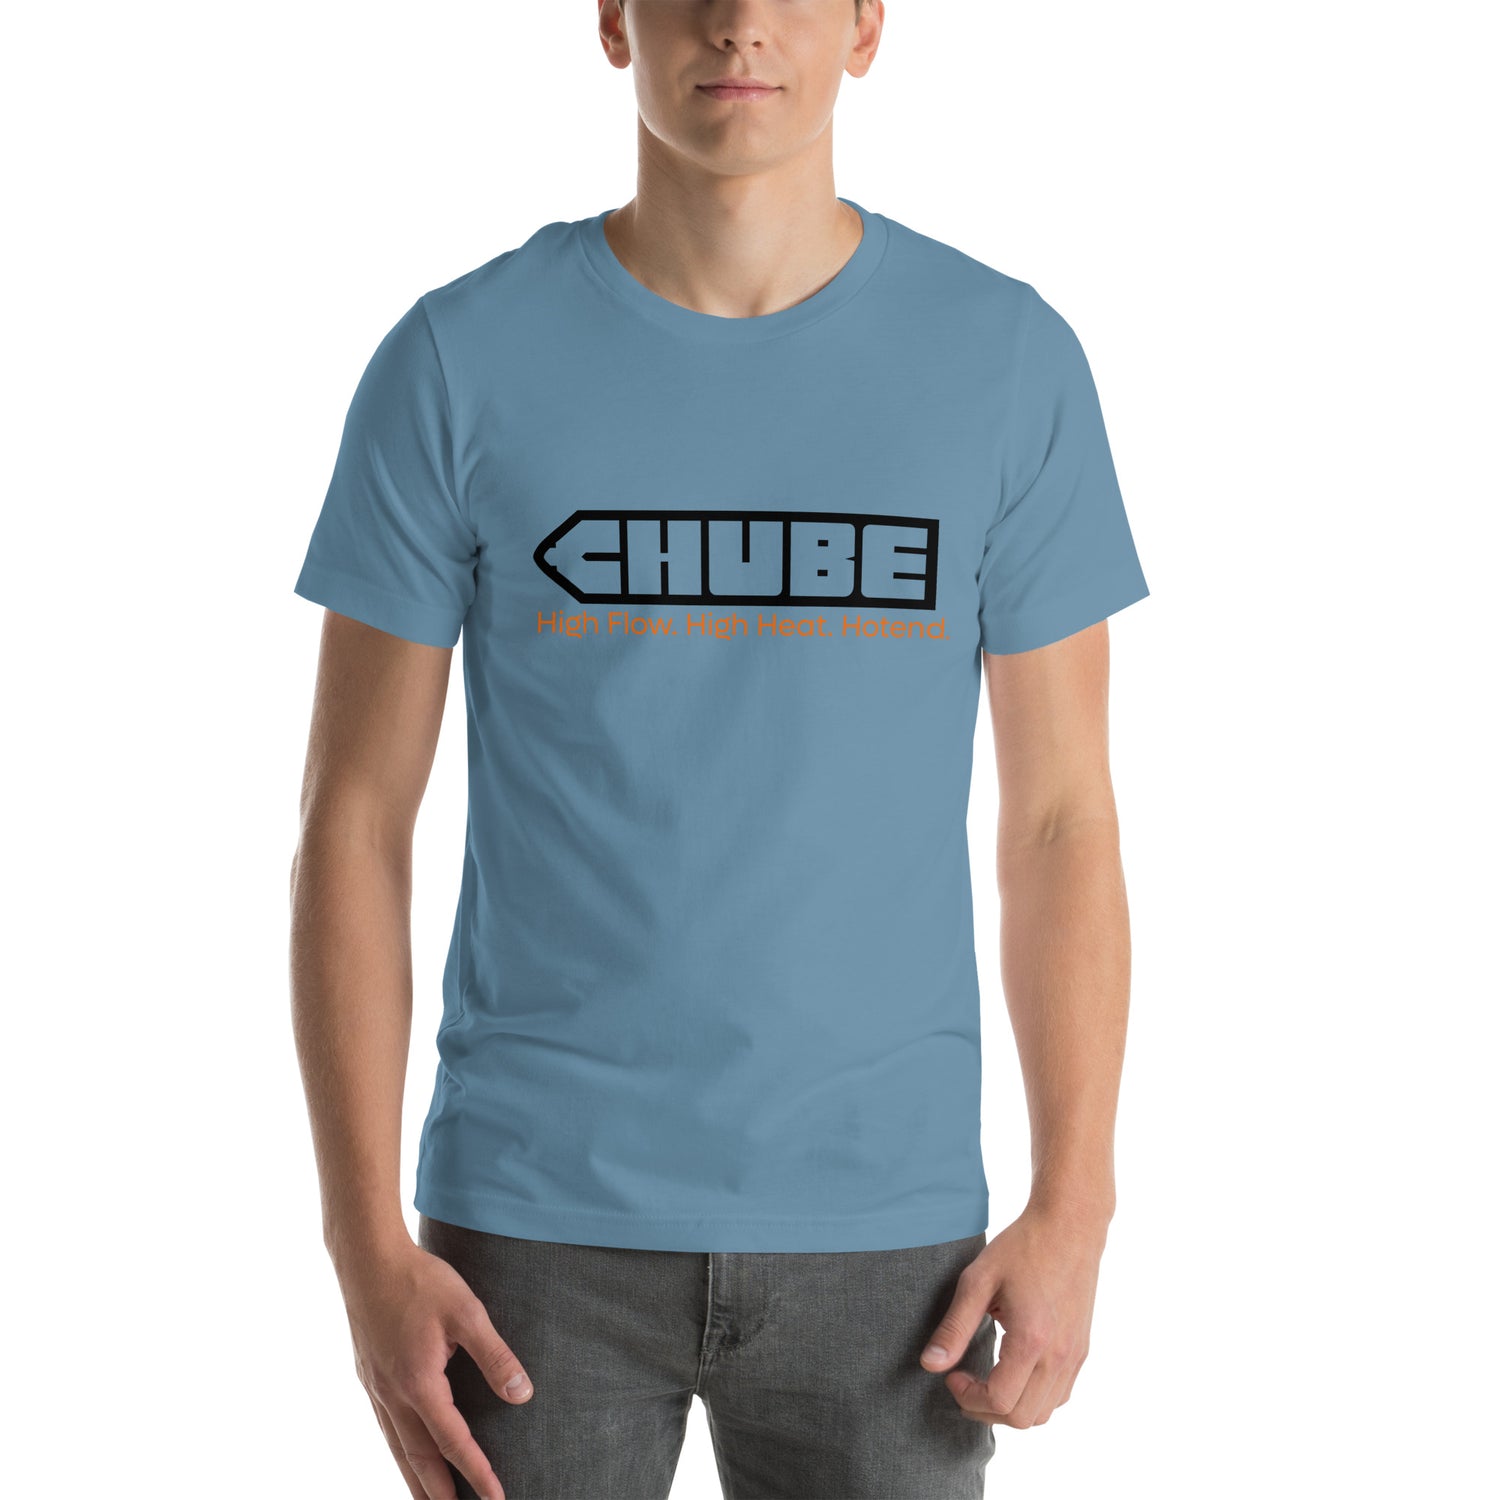 Chube T-Shirt